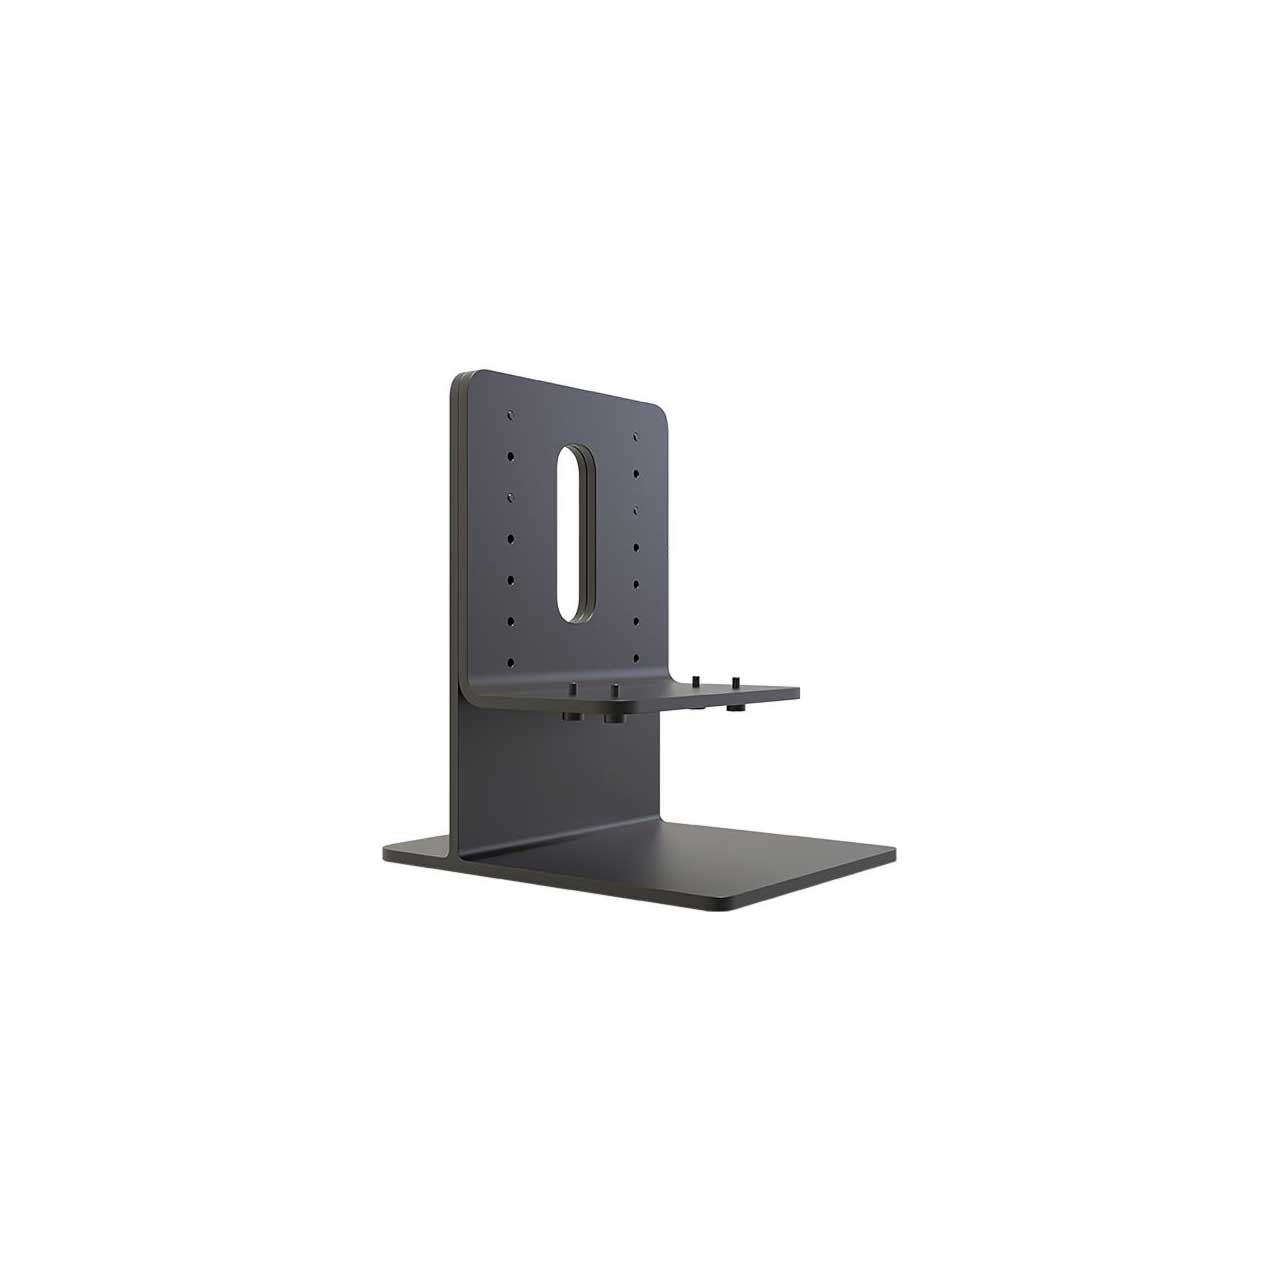 DTEN ME Adjustable Stand and Desktop Mount - Standard 100x100mm VESA Compatible DAS0127